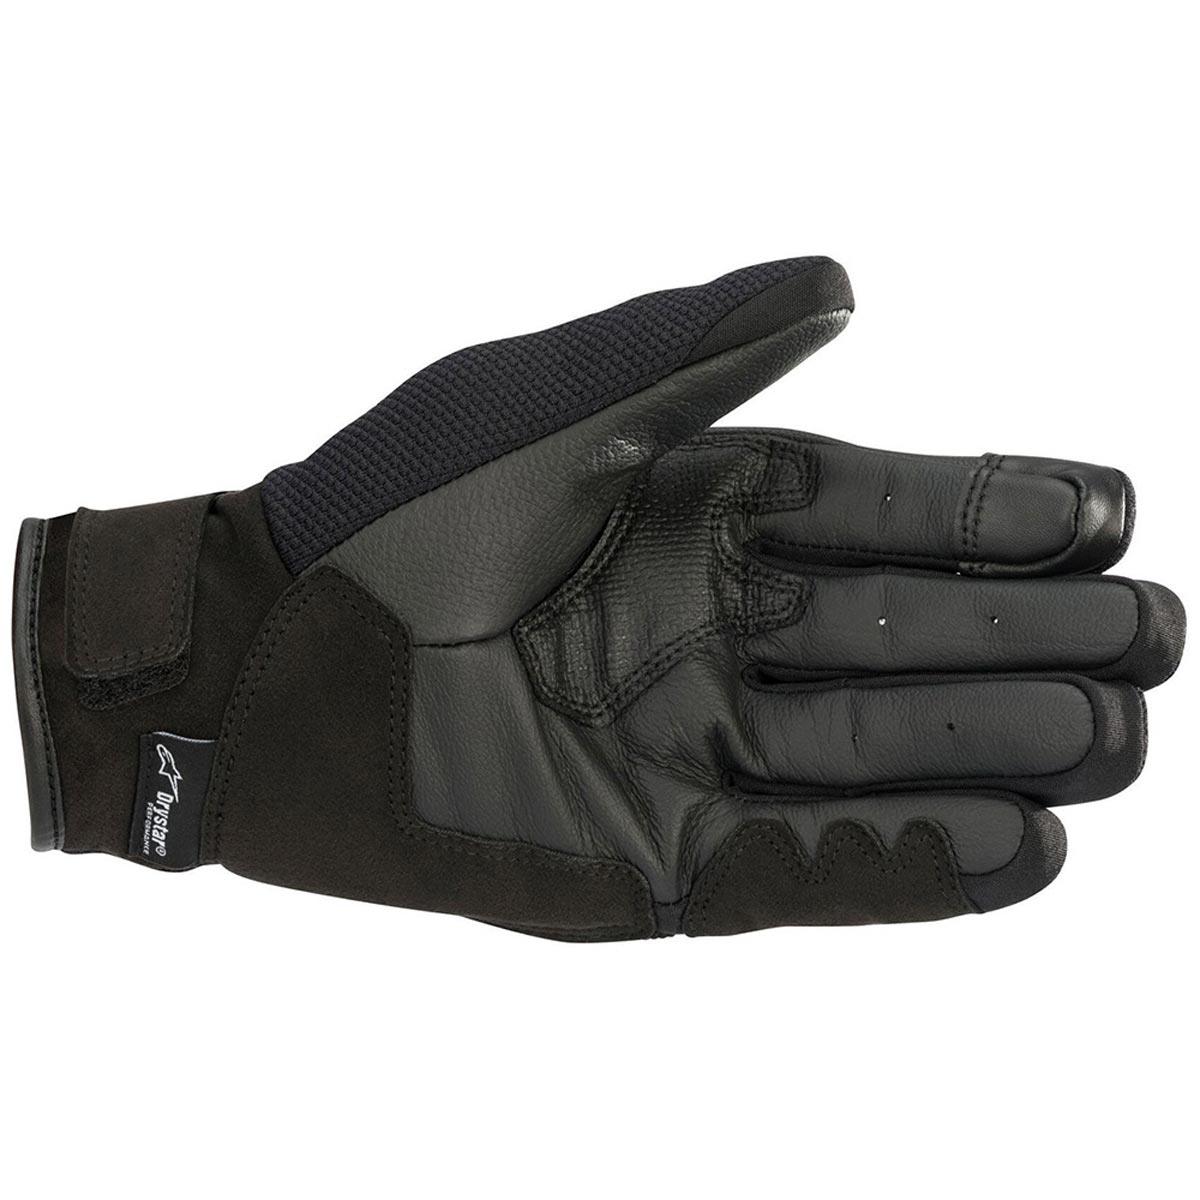 Alpinestars S Max Drystar Gloves WP Black White - Waterproof Motorcycle Gloves